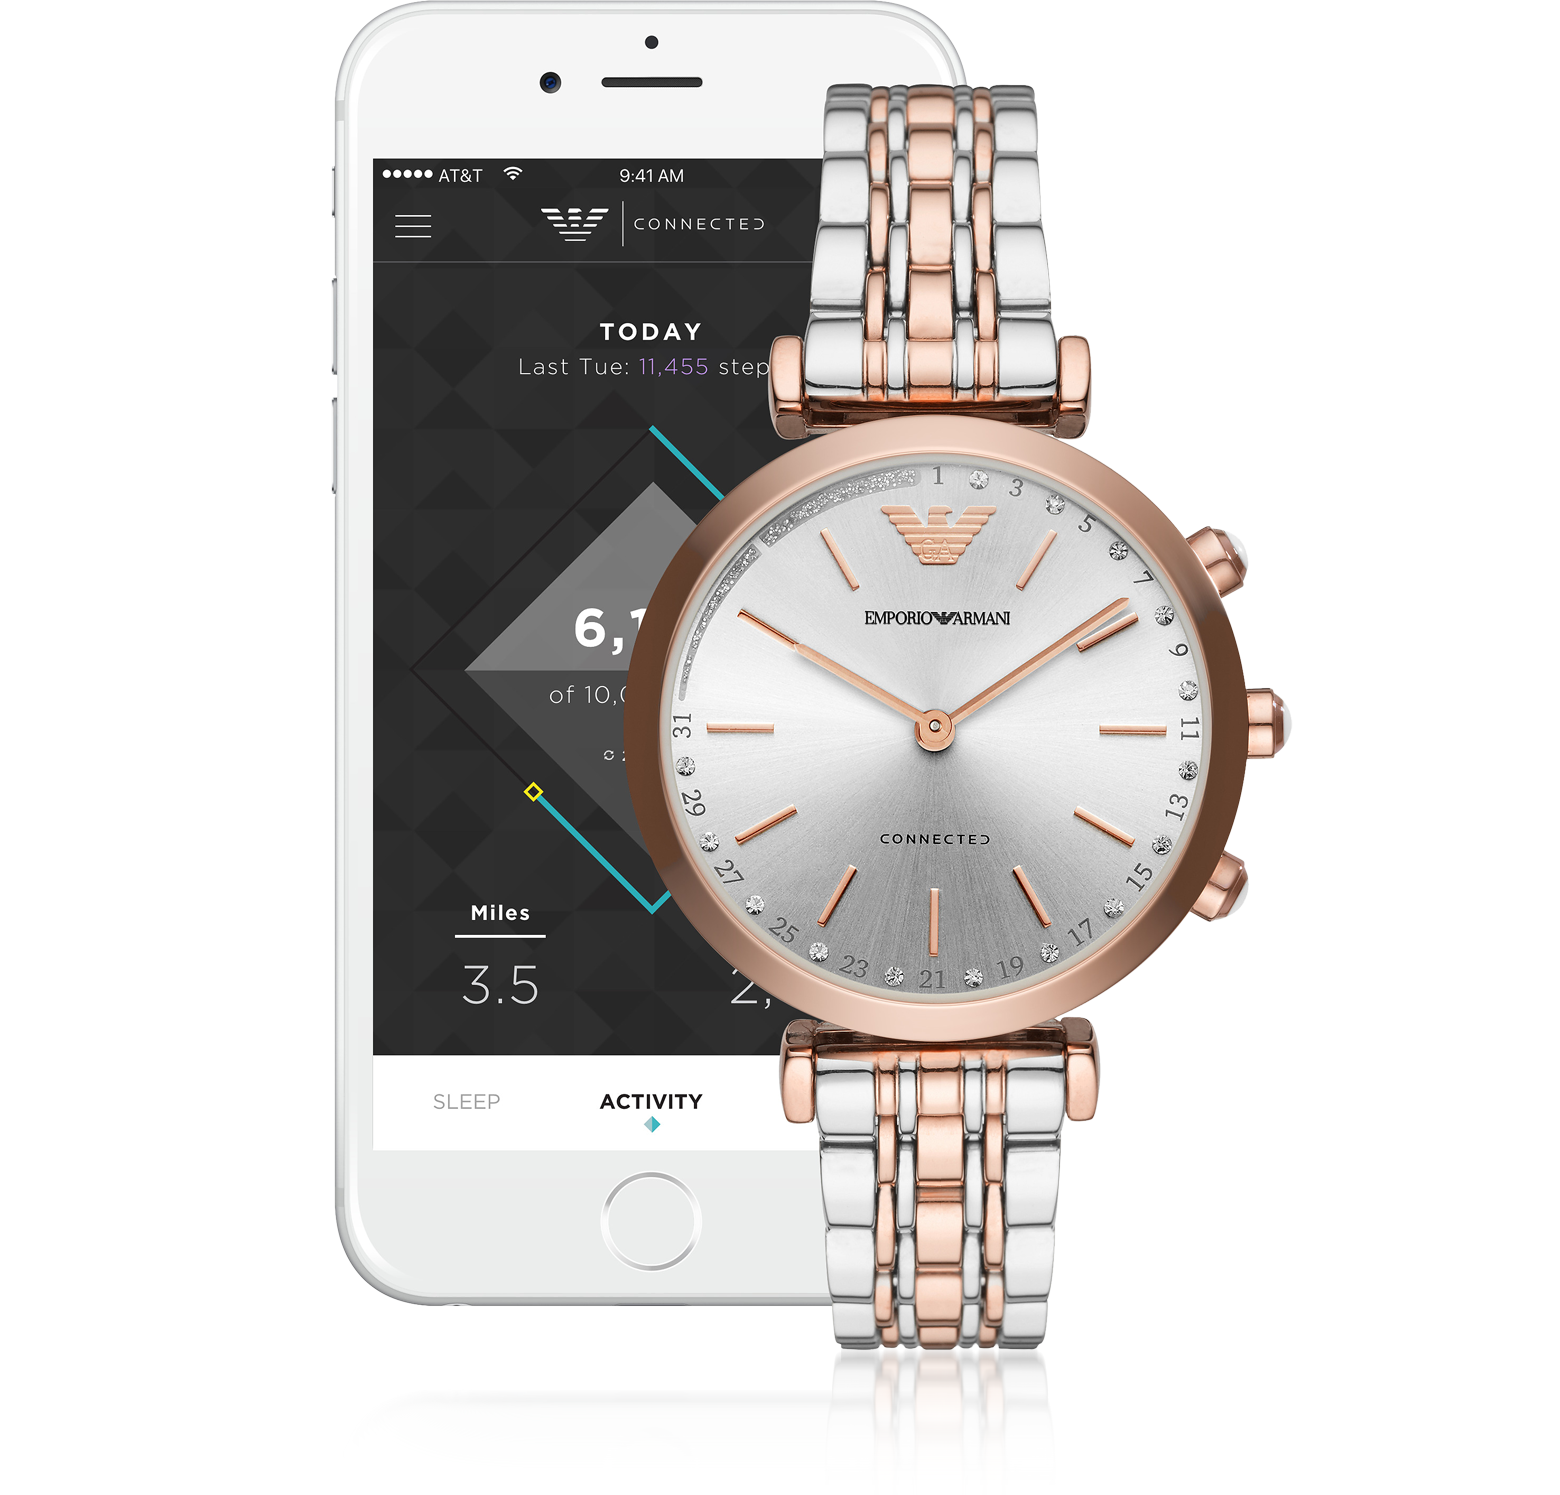 emporio armani connected women's hybrid smartwatch